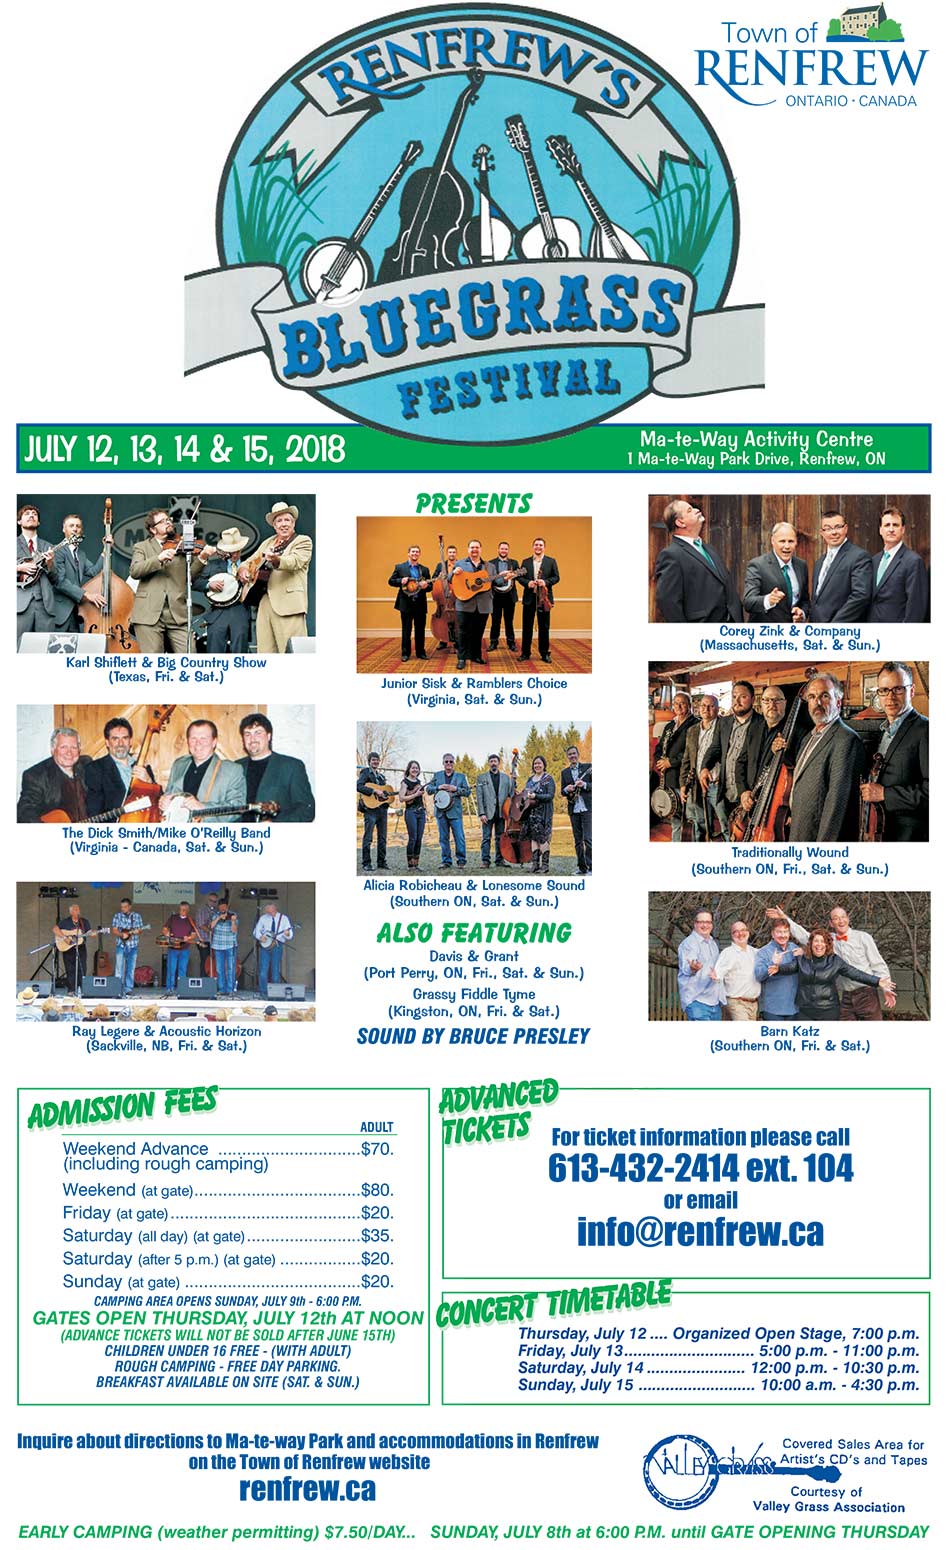 Renfrew's Bluegrass Festival